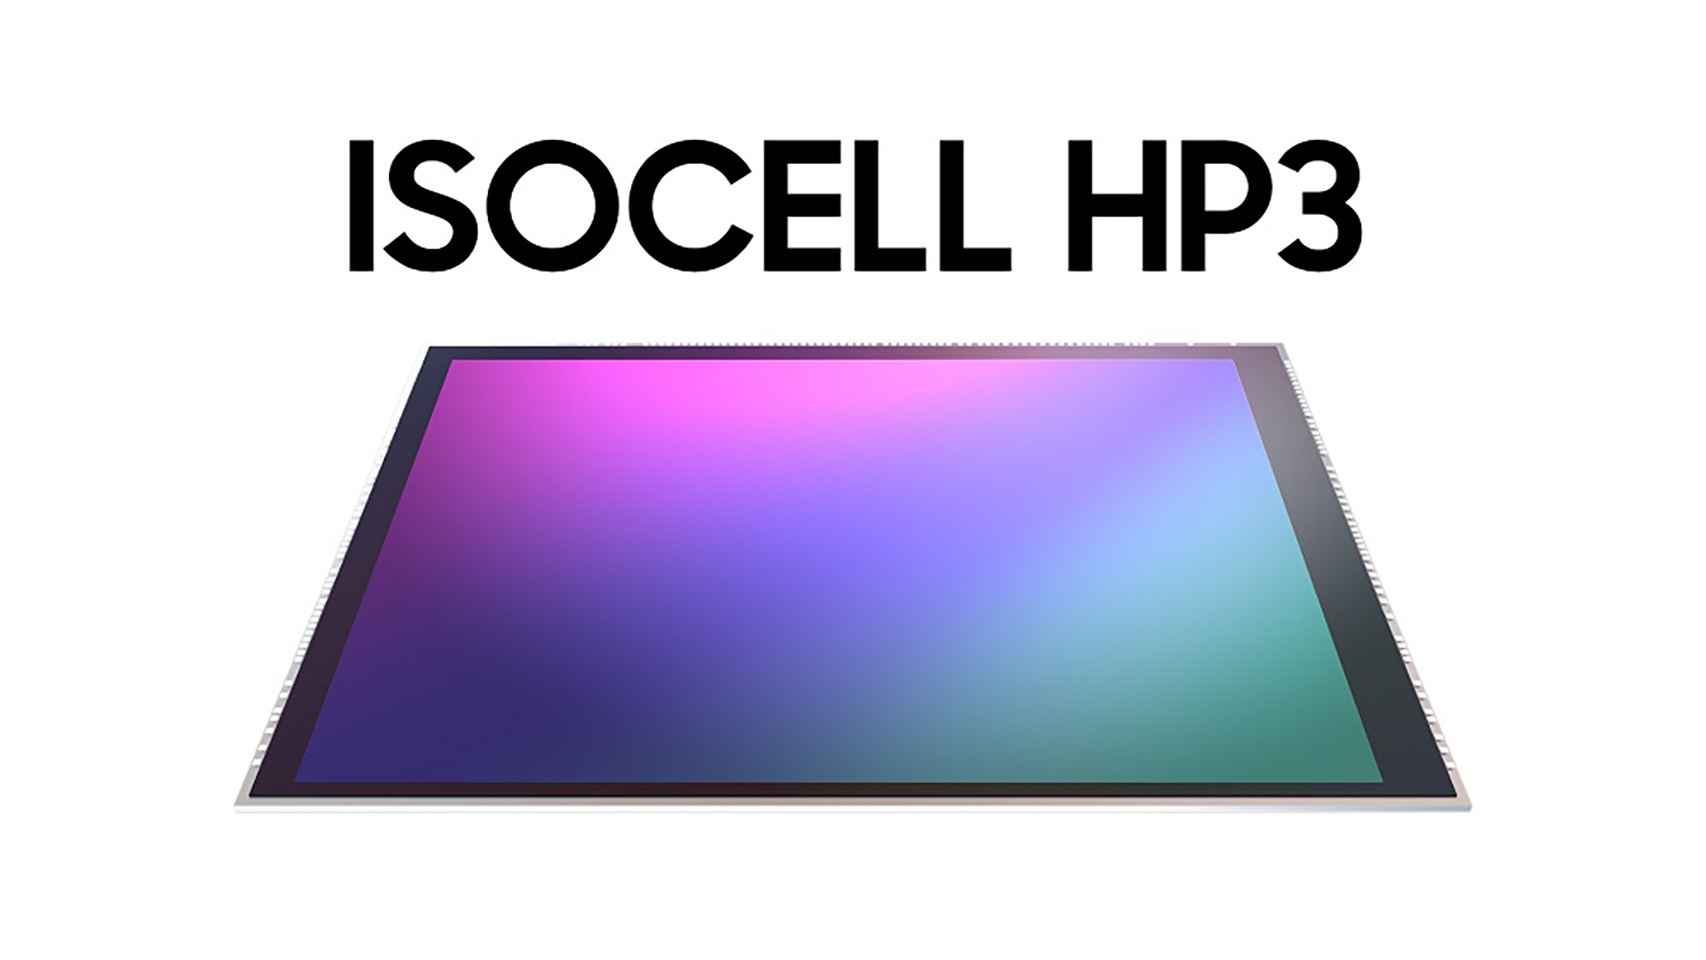 Samsung anuncia el sensor de cámara ISOCELL HP3 de 200 MPx